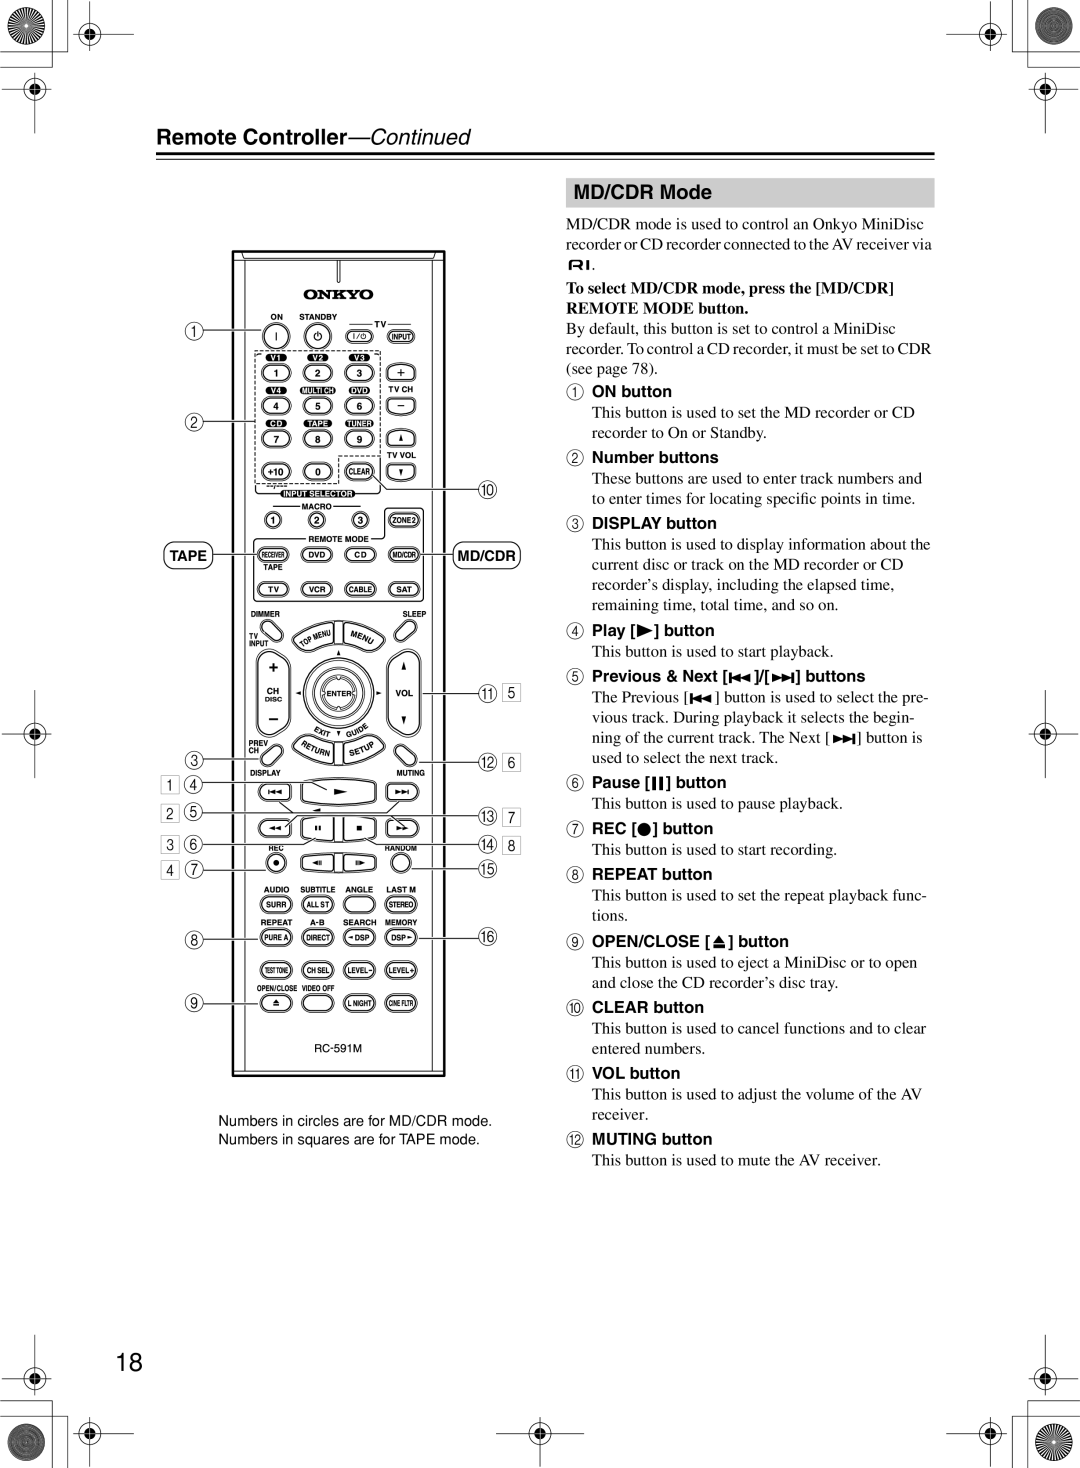 Onkyo TX-SR8360, TX-SR603/603E instruction manual MD/CDR Mode, Remote Controller—Continued 